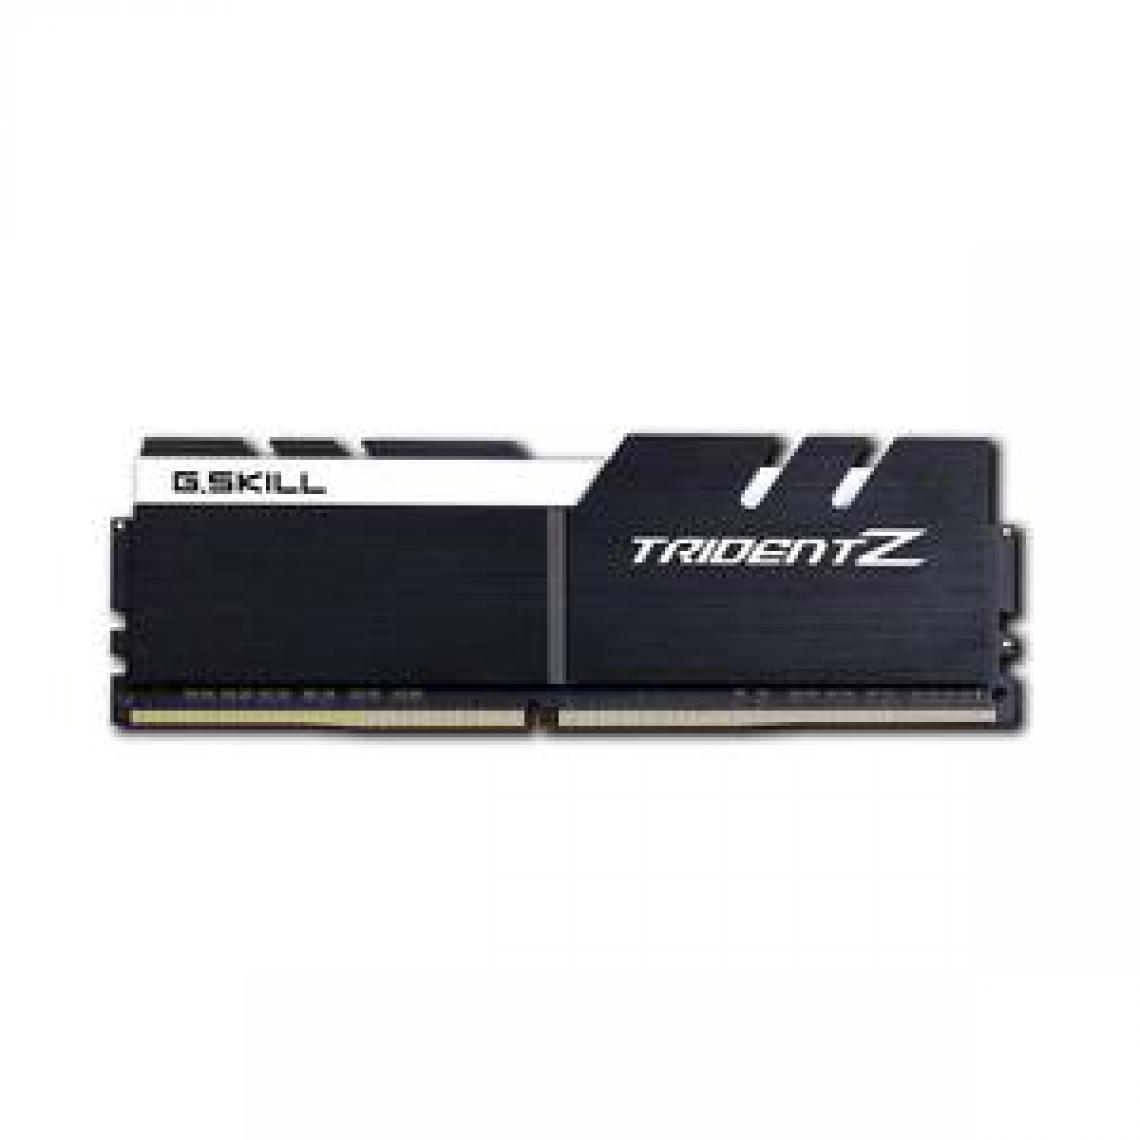 Gskill - Trident Z 16 Go (2x 8 Go) DDR4 4133 MHz CL19 Blanc et noir - RAM PC Fixe